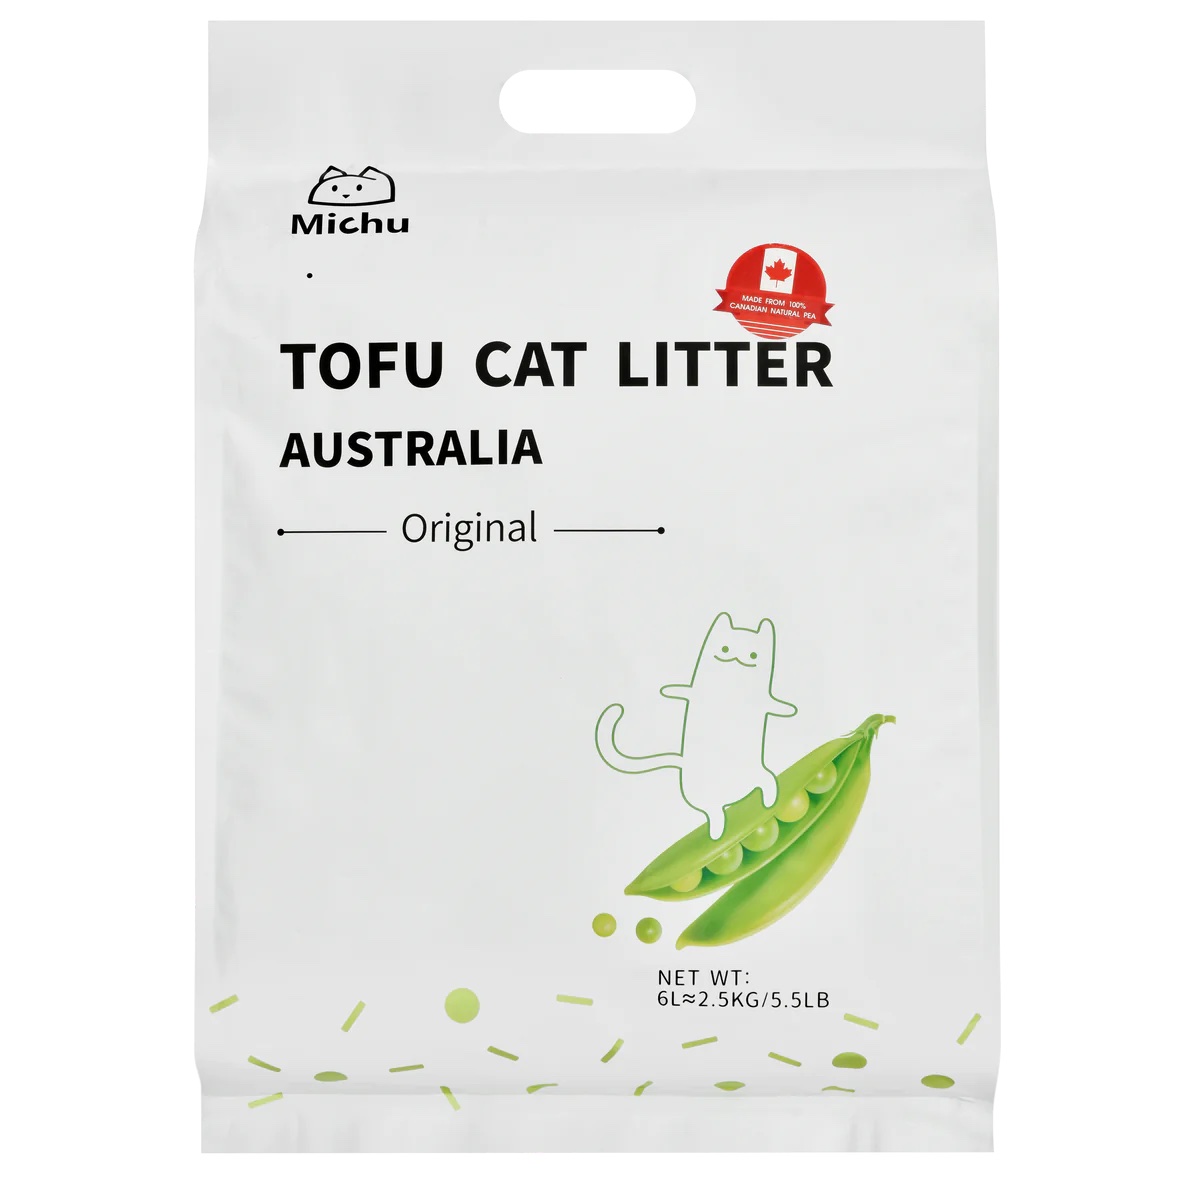 MichuPet Katzenstreu aus Tofu - Original - Original / 6 Liter von Pets Deli